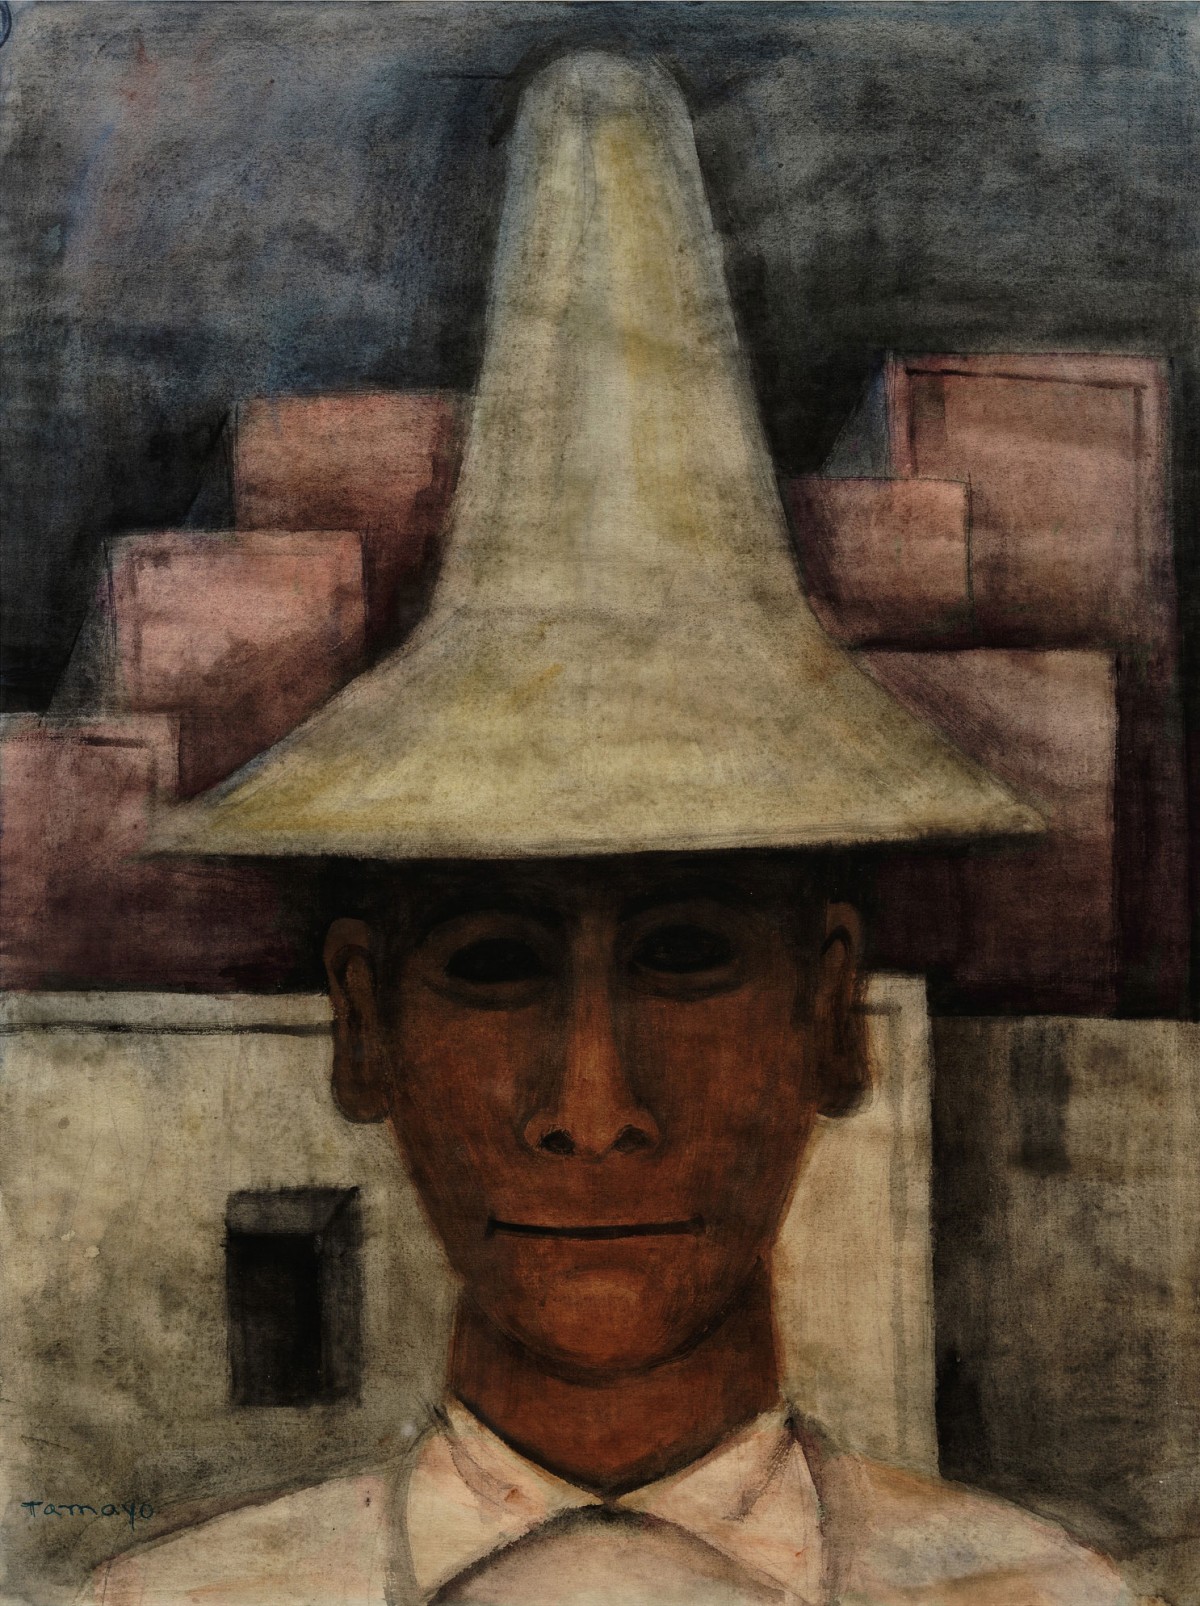 Rufino Tamayo, Man with Tall Hat (Hombre con sombrero alto), circa 1930, 